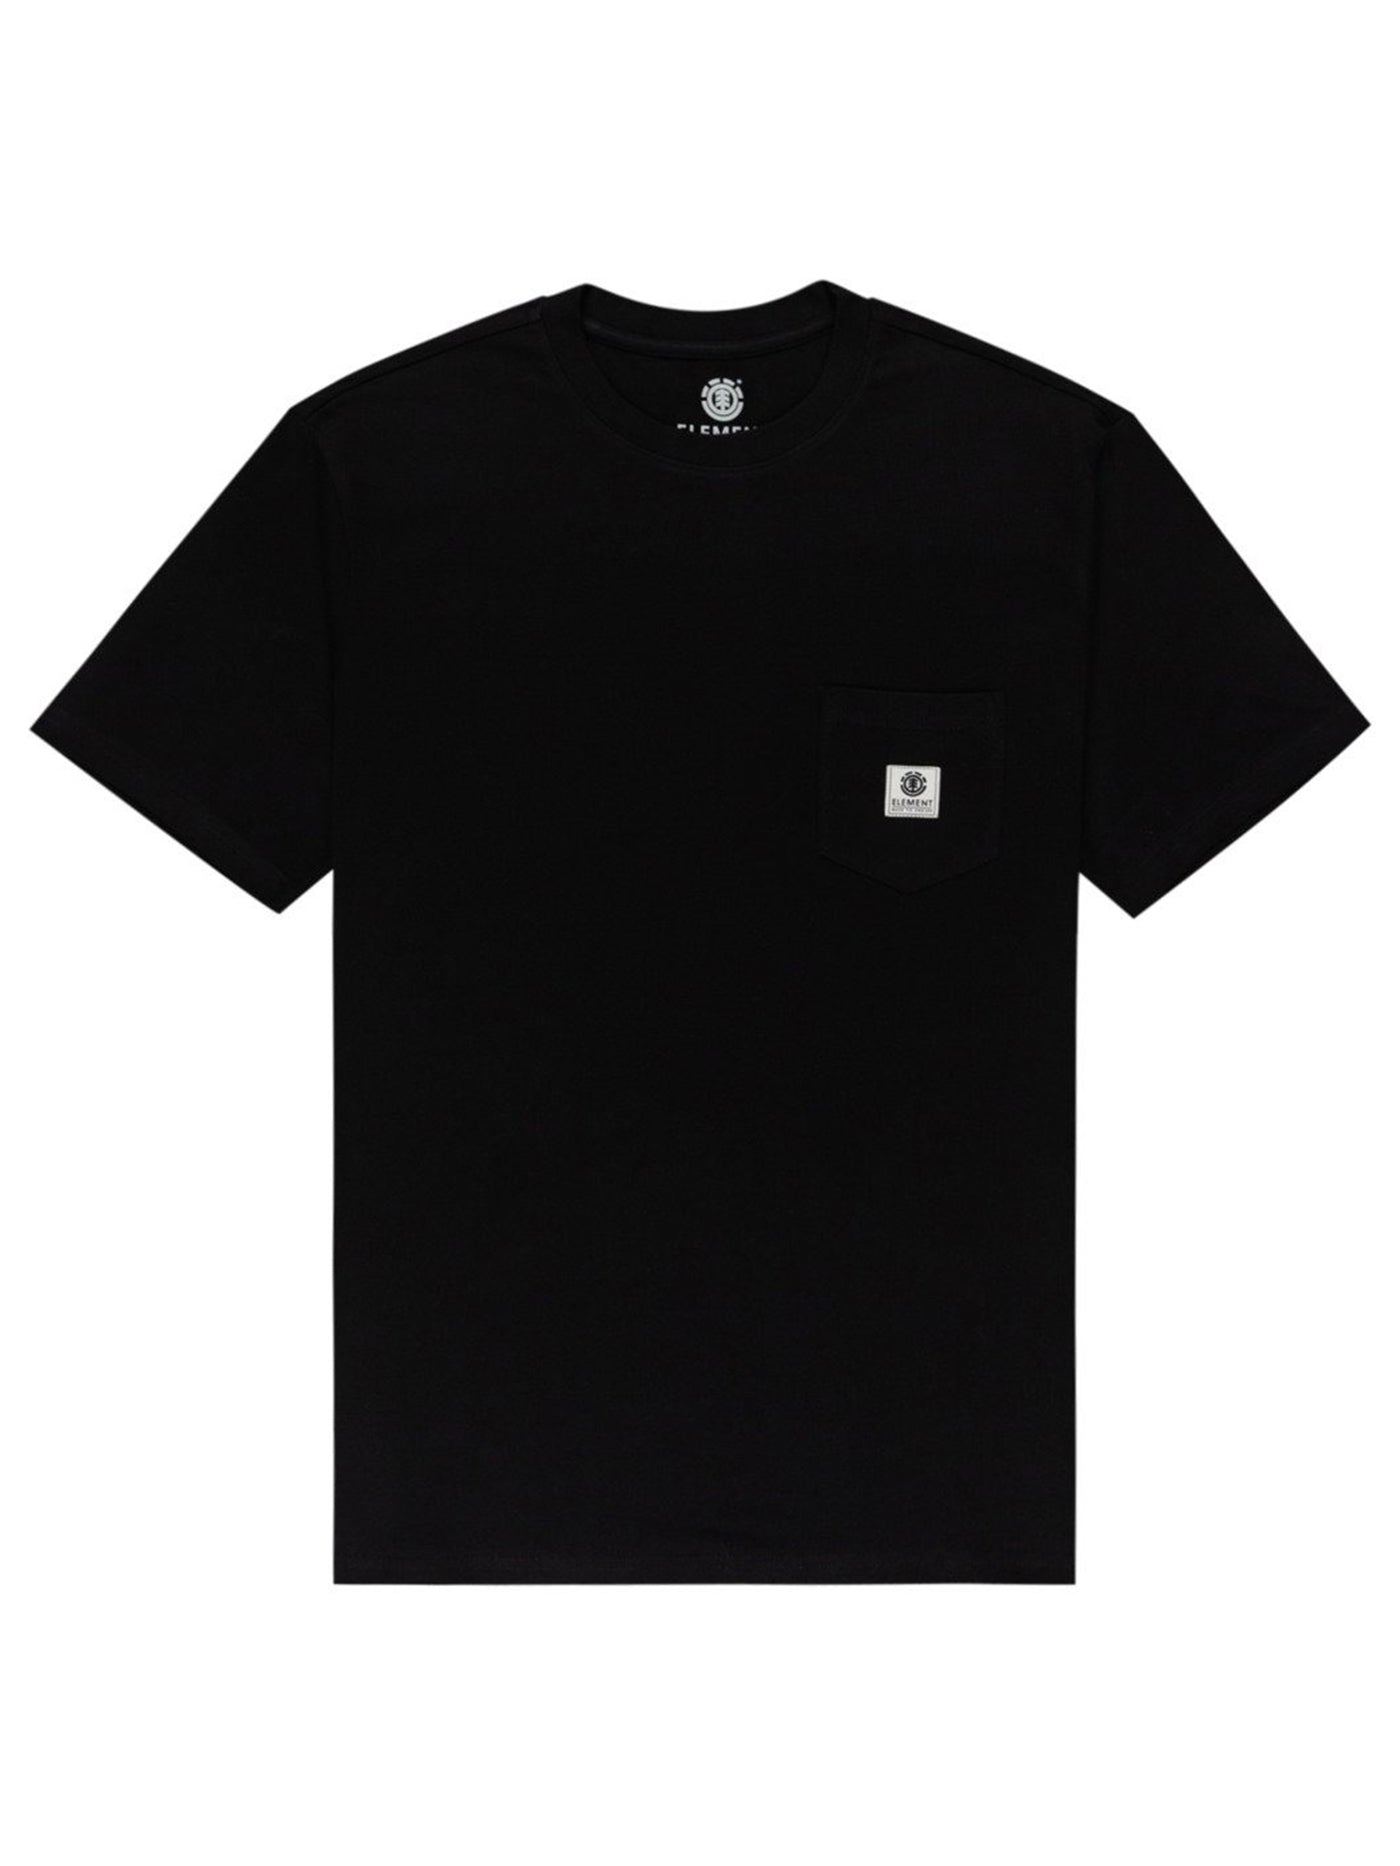 Element Basic Pocket Label T-Shirt